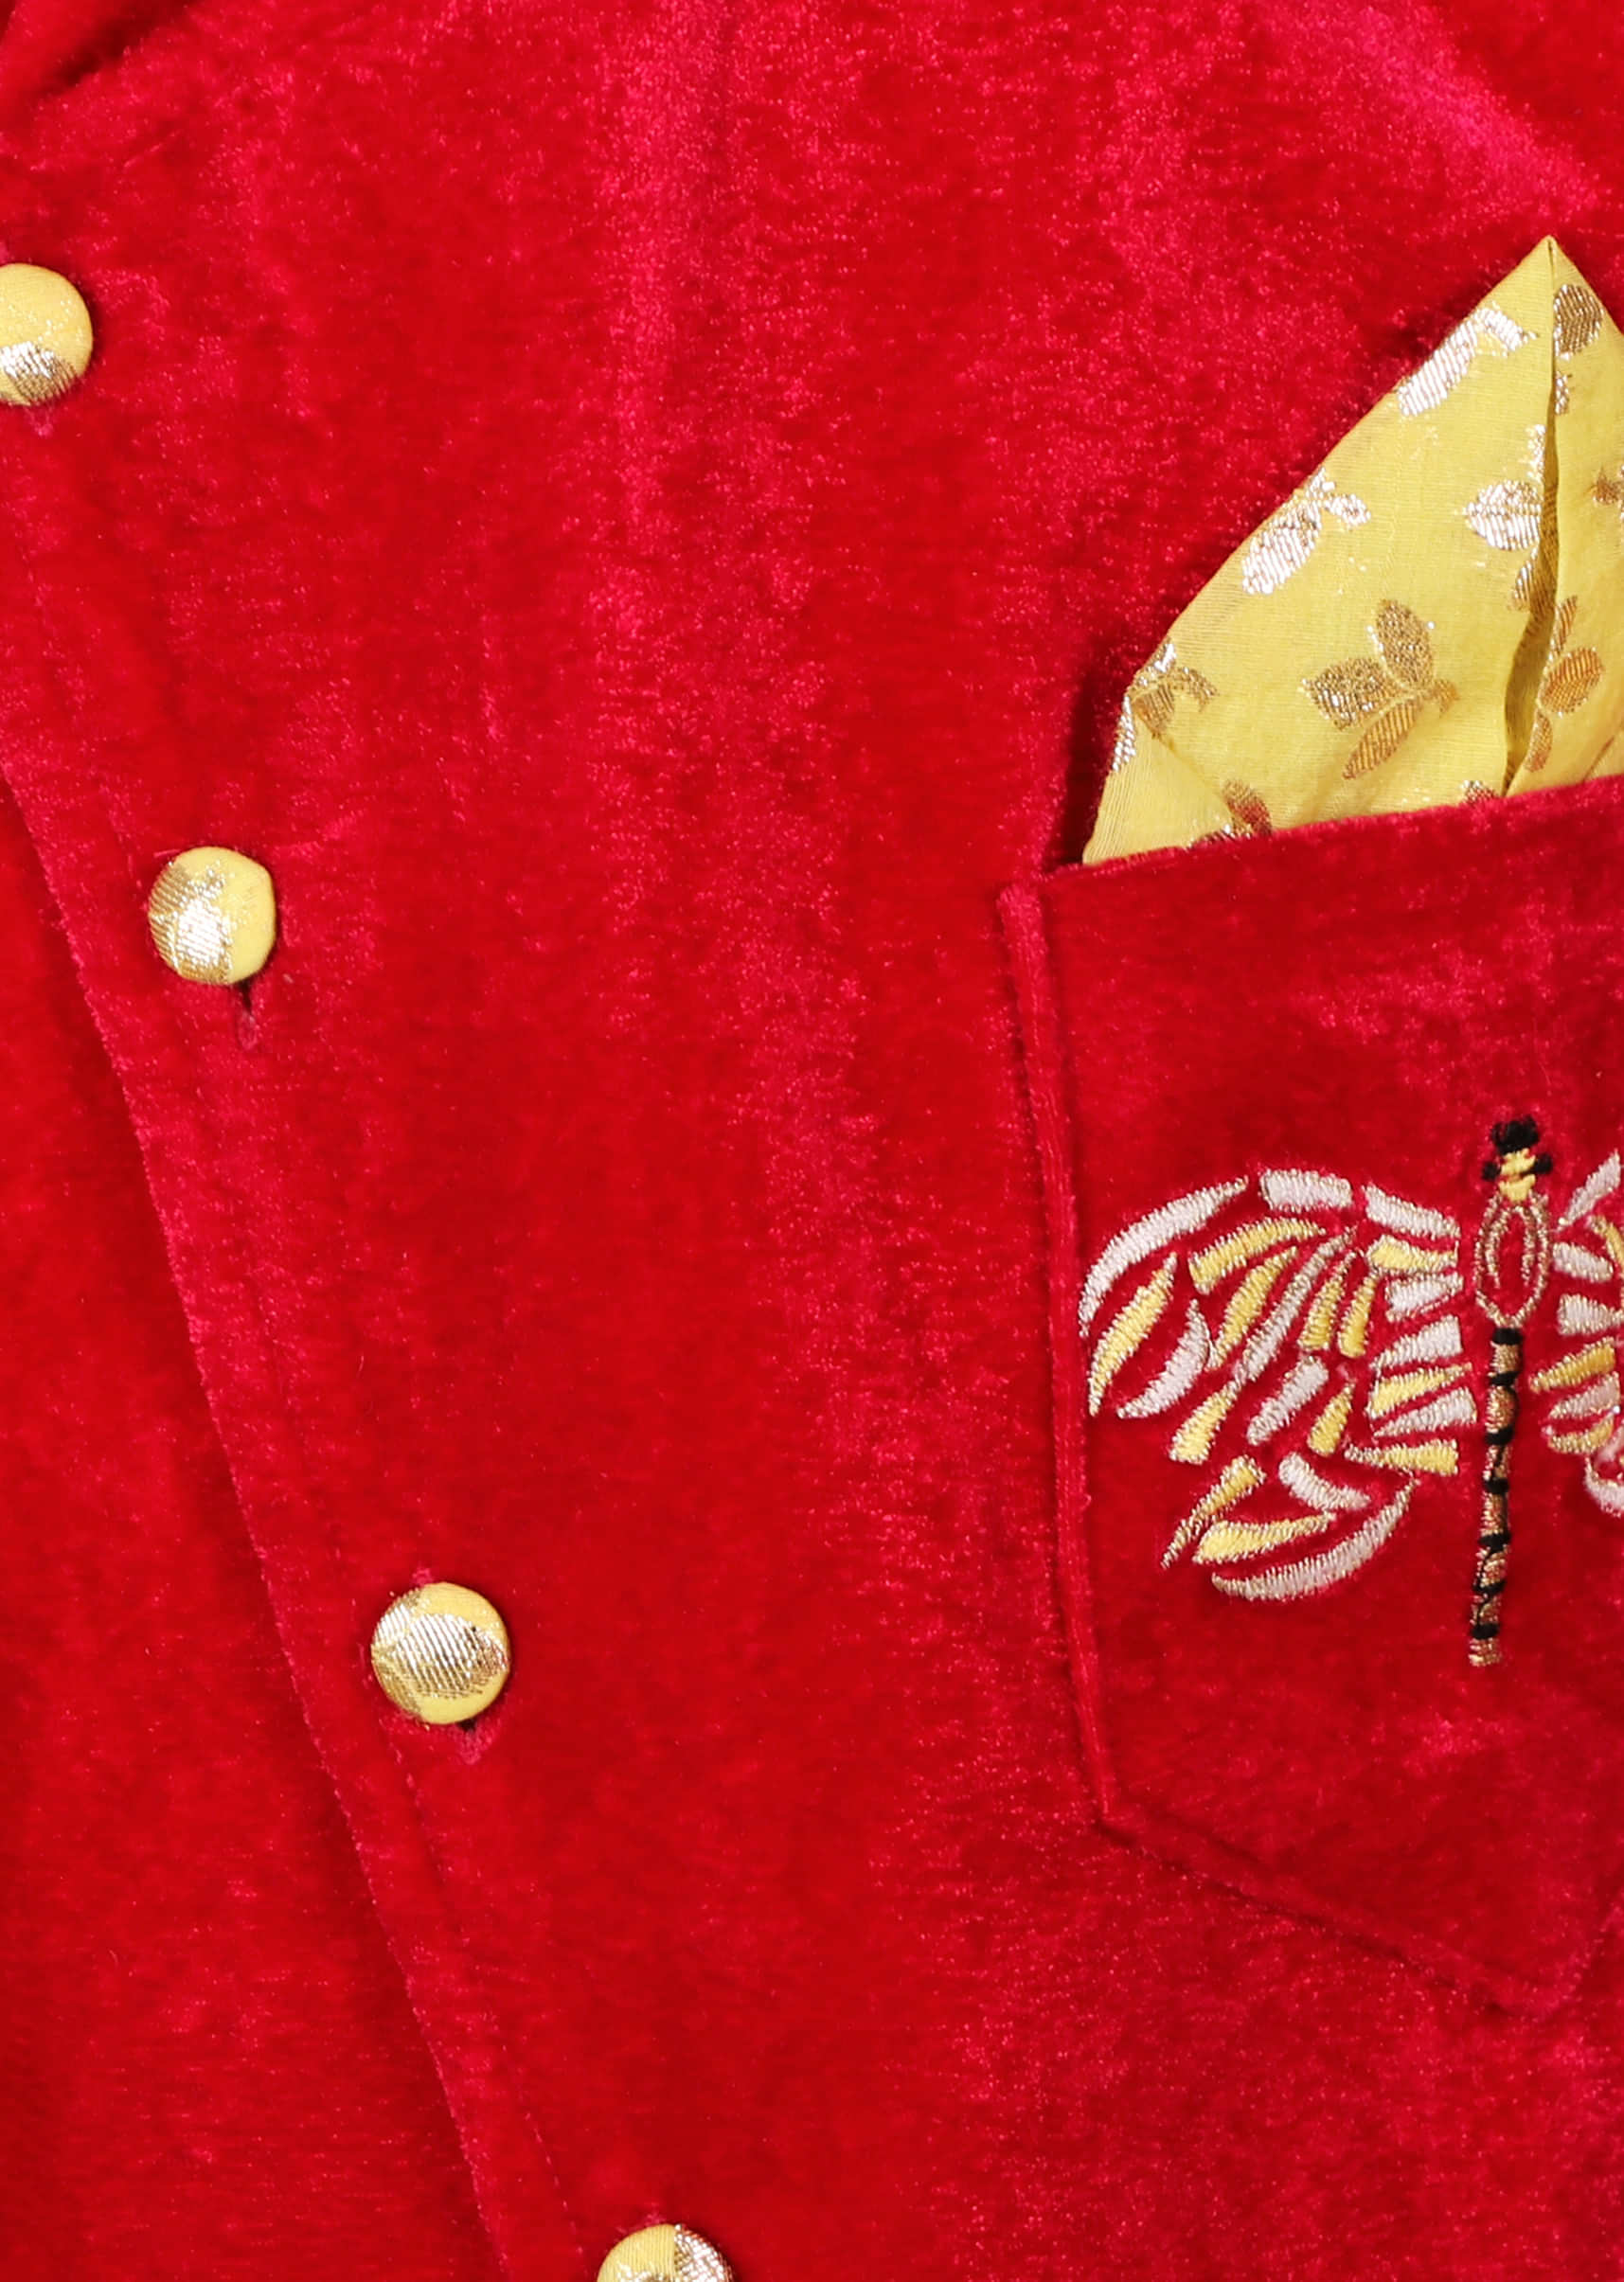 Kalki Boys Red Bandhgala Set In Velvet With Embroidered Dragonfly Design On The Pocket